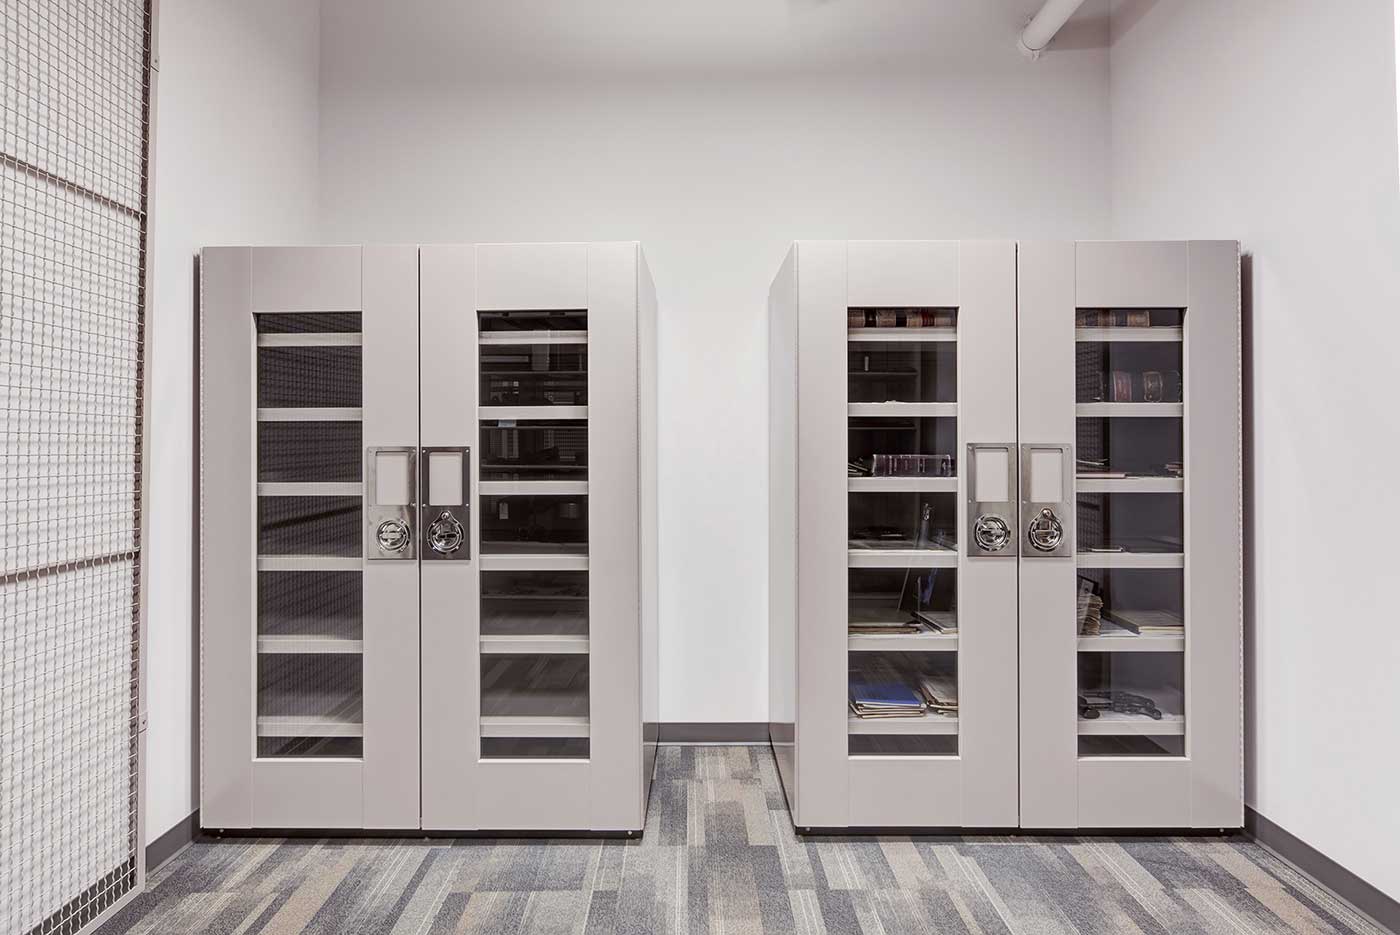 public safety building archive storage